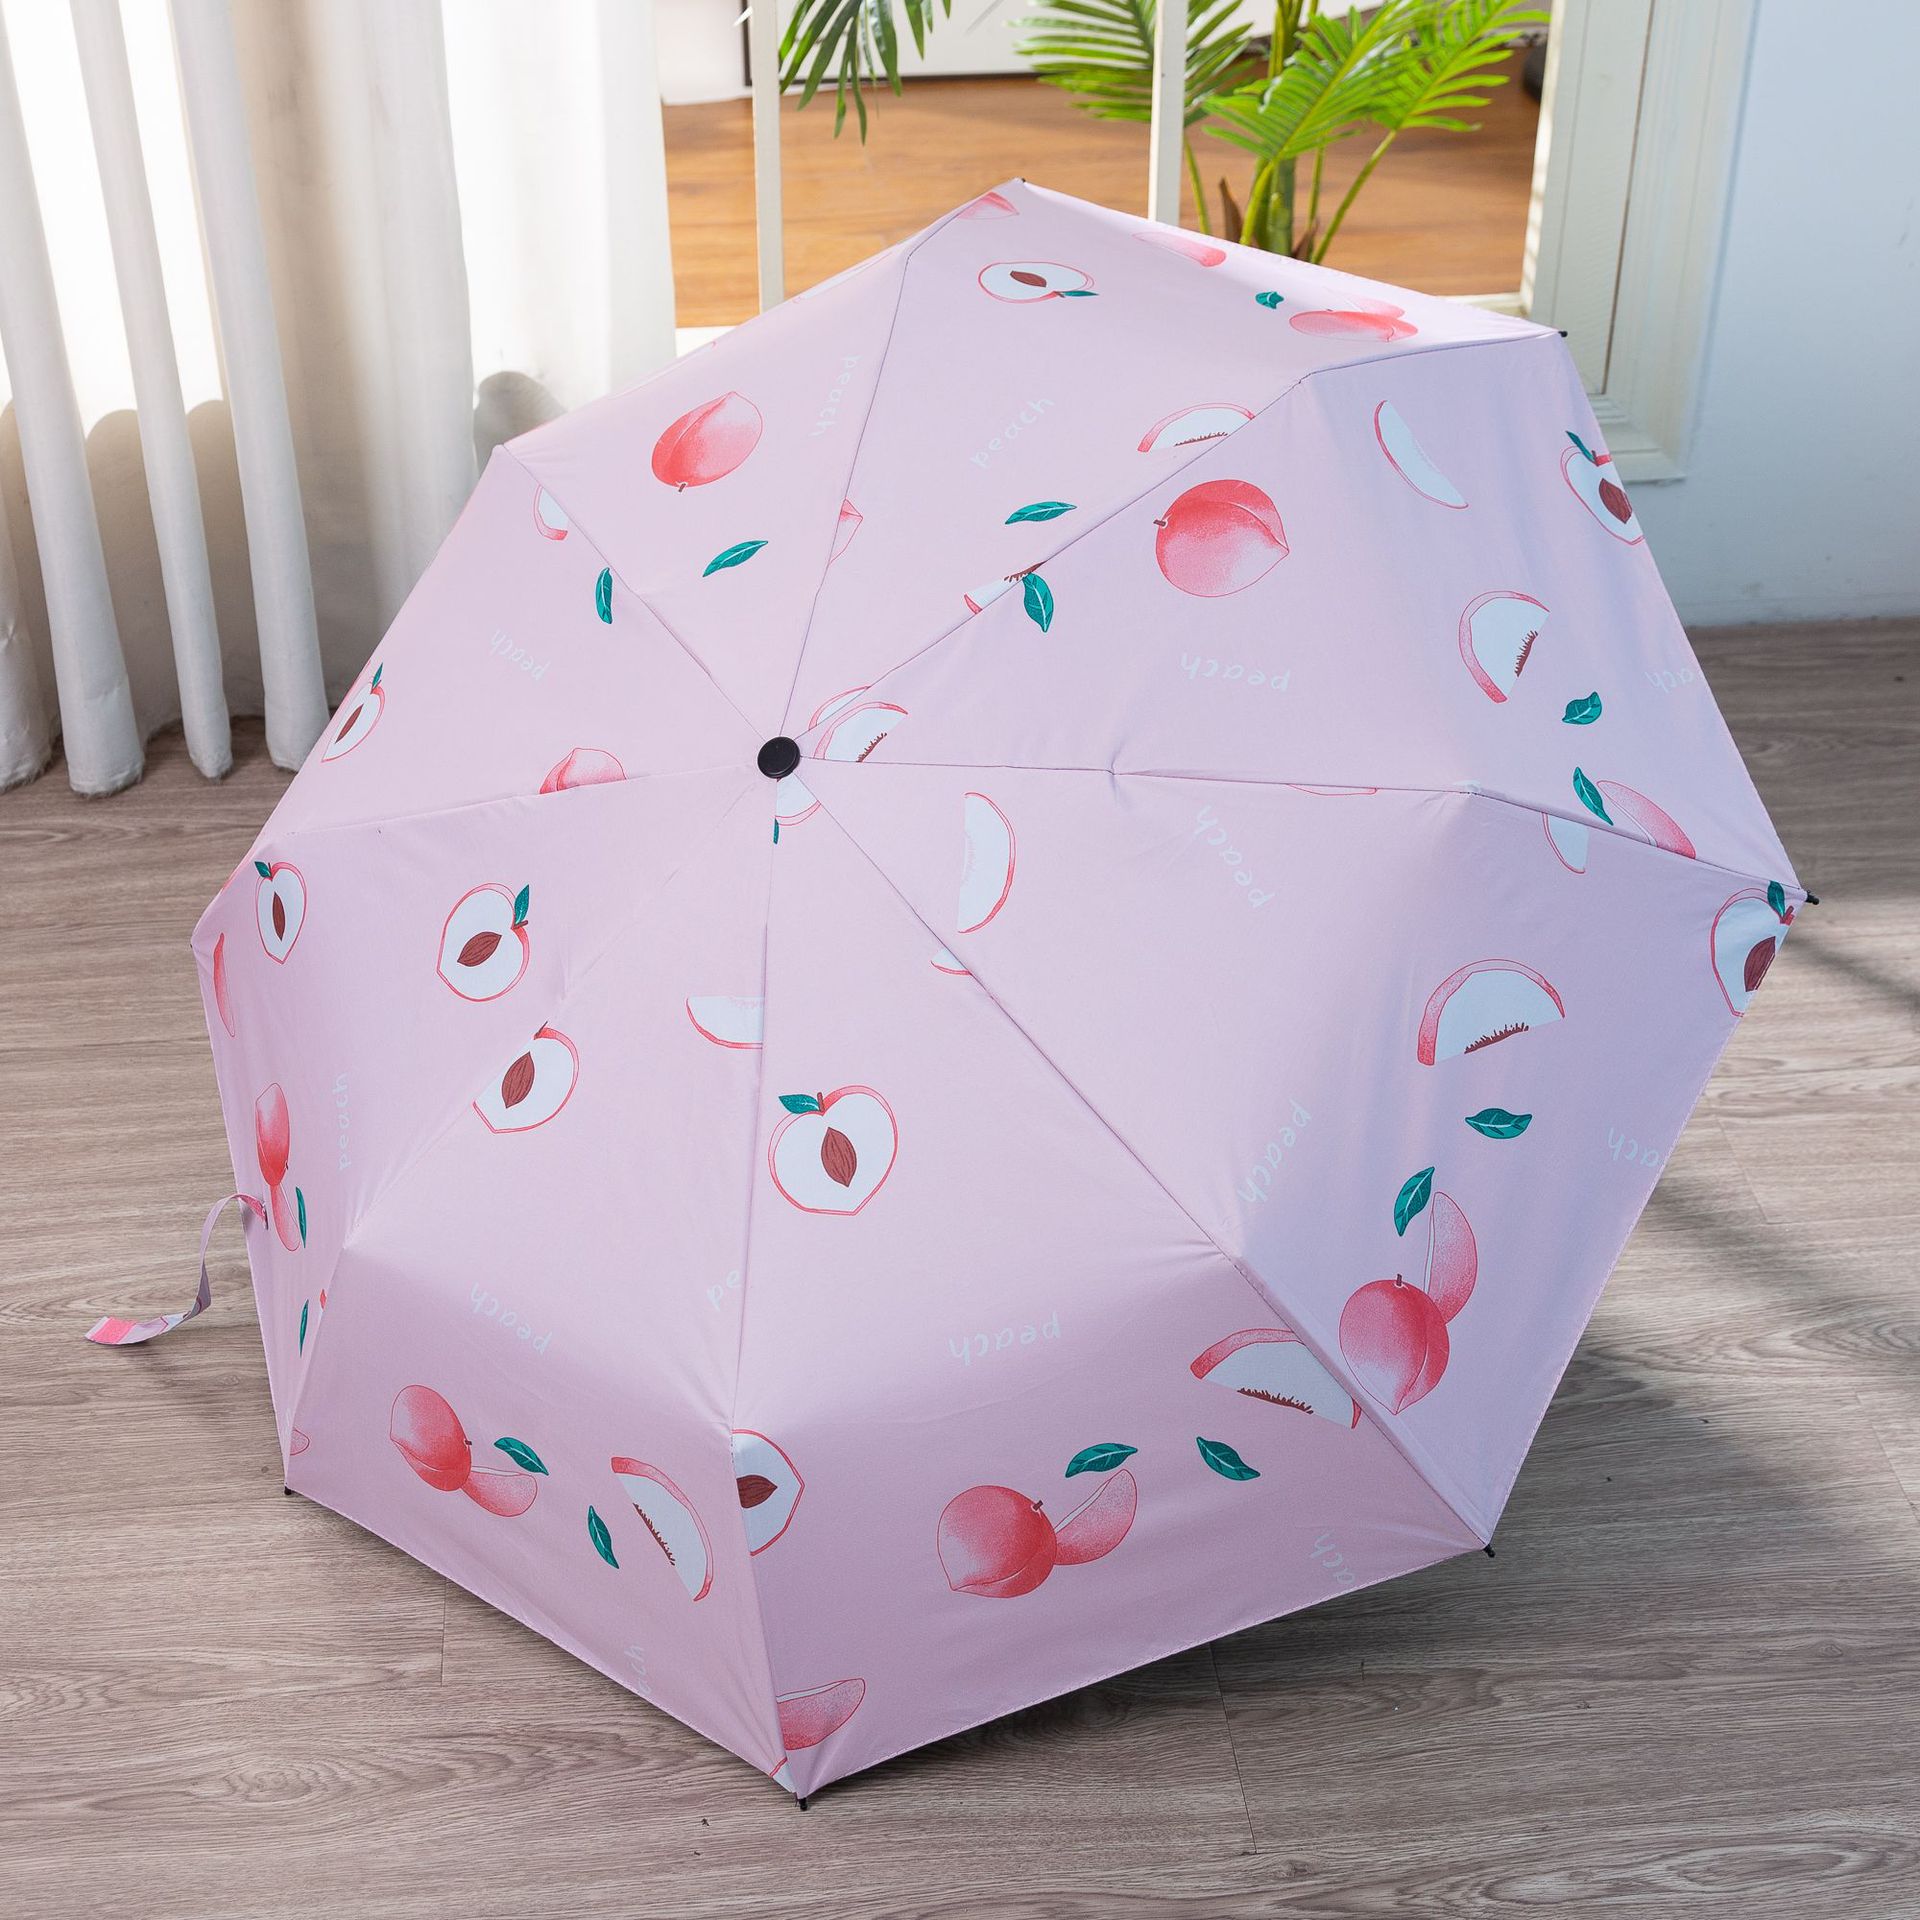 Full-Automatic Floral Fruit Sun Umbrella Tri-Fold Uv-Proof Daisy Thickened Vinyl Umbrella Uv Bear Sun Umbrella